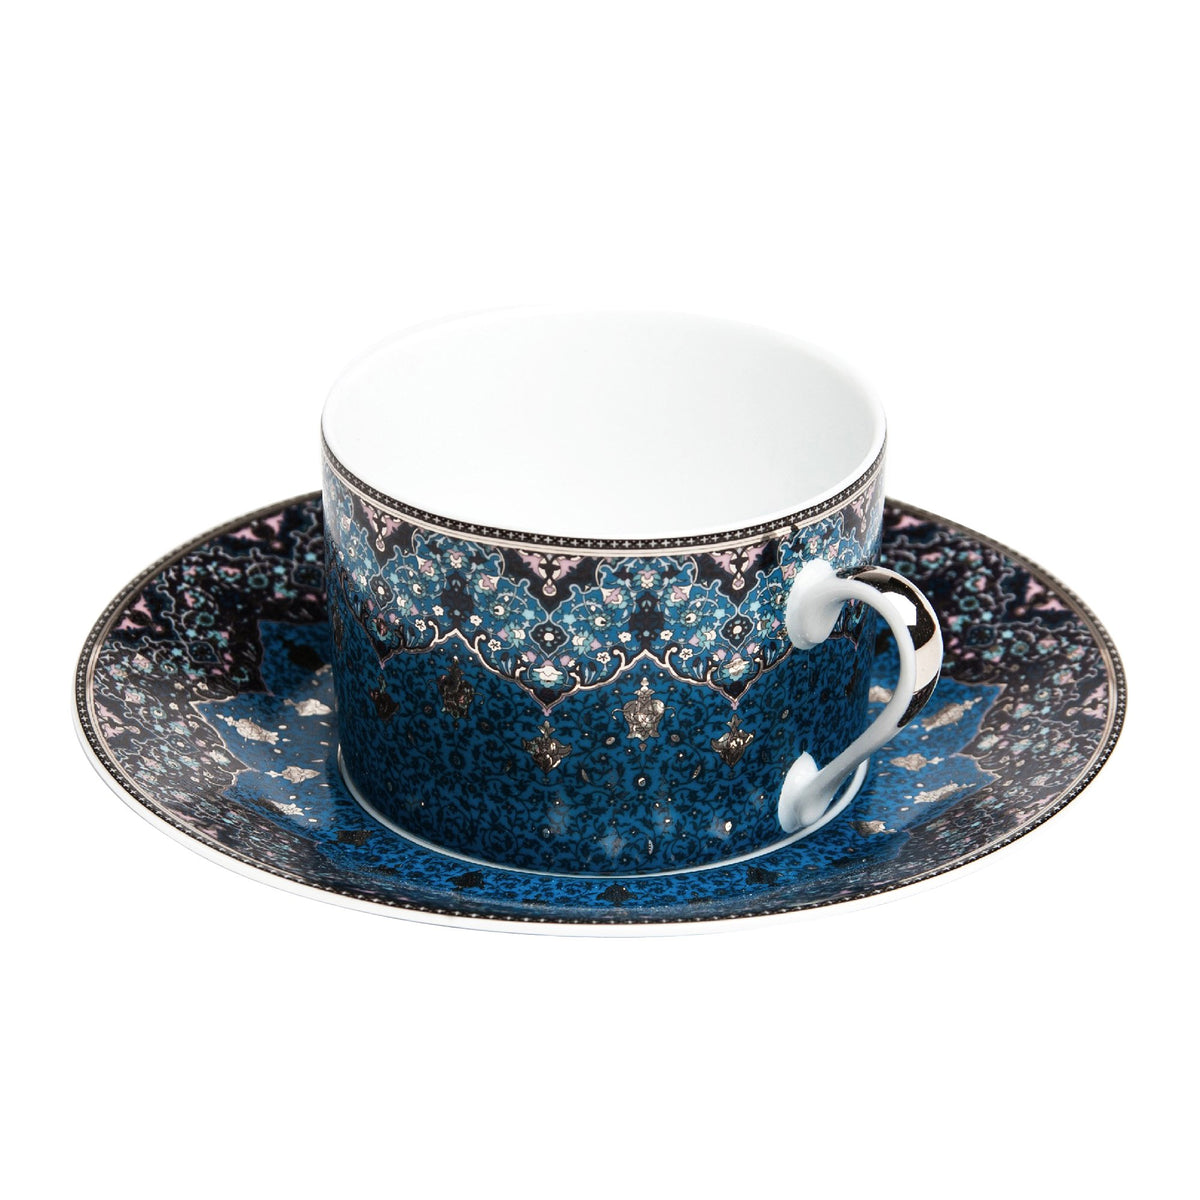 Dhara Tea Cup and Saucer - Peacock